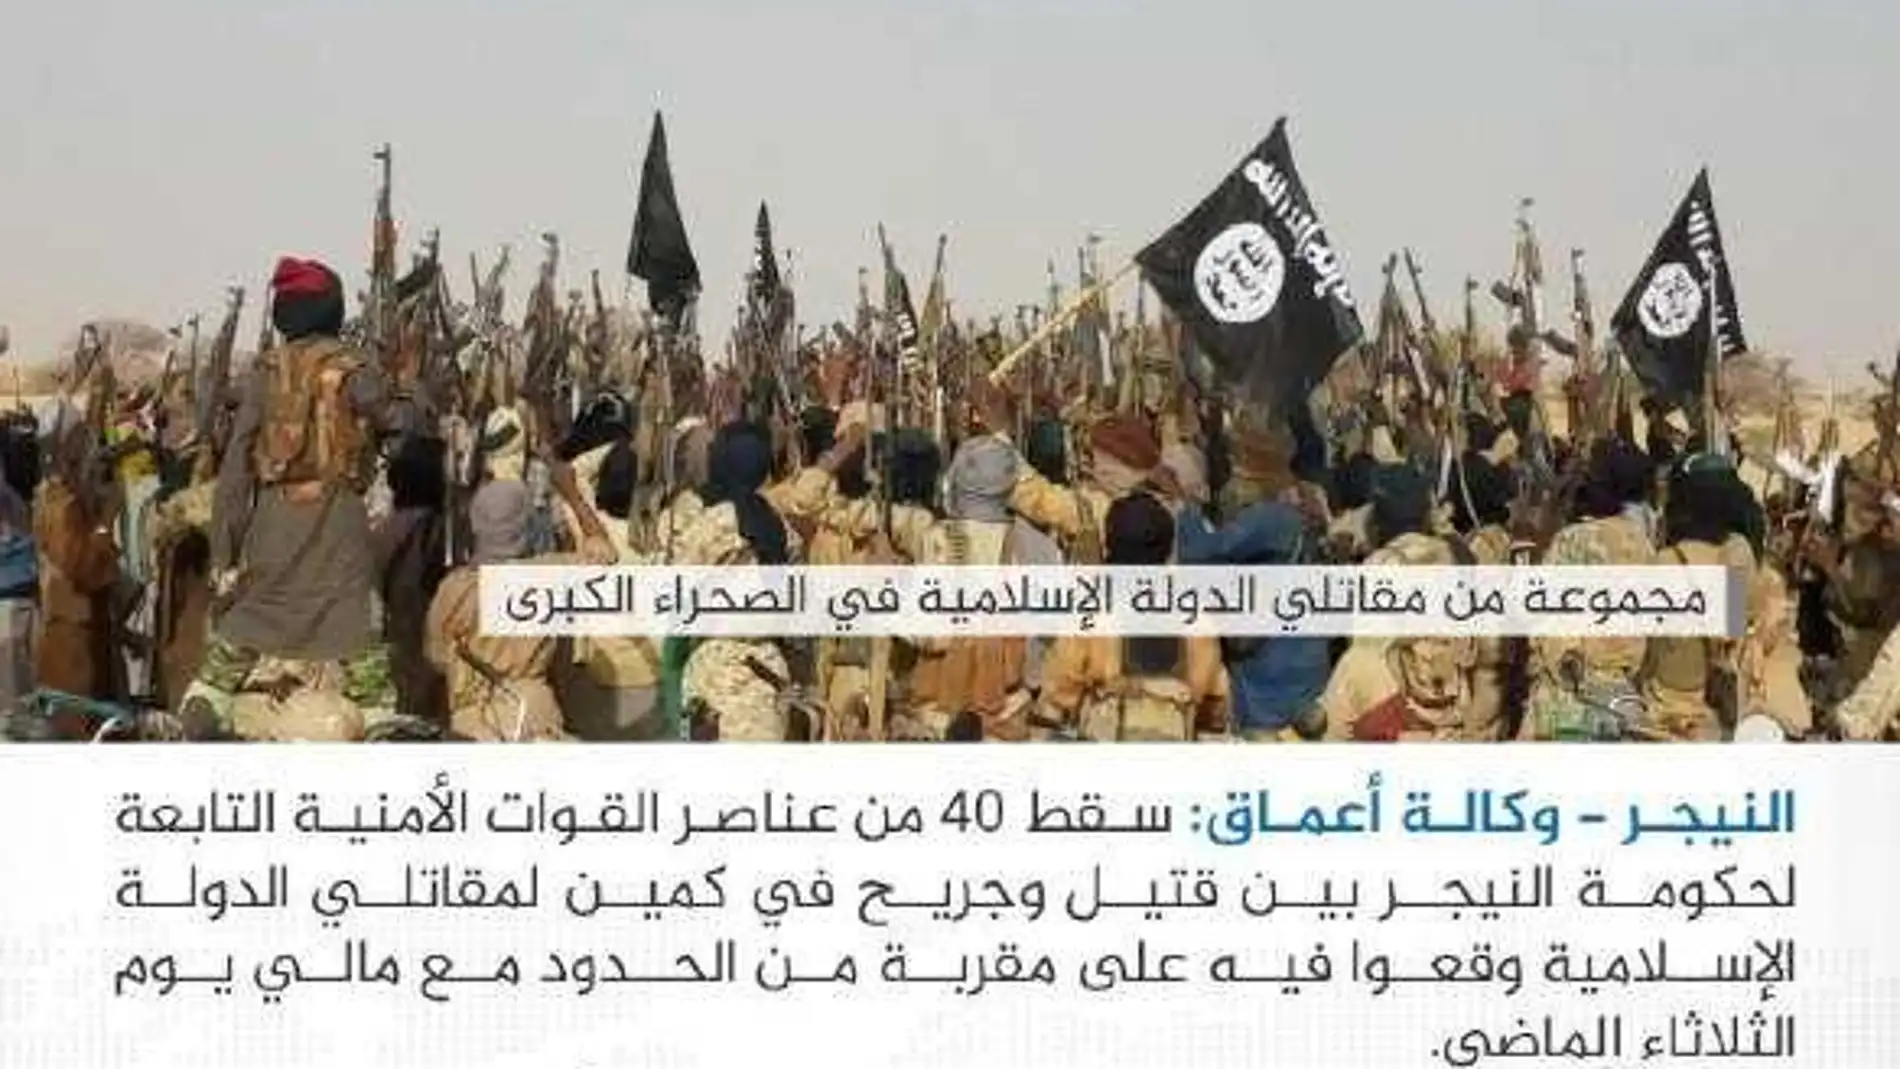 El “cibercalifato” activa toda su maquinaria para presentar a Daesh como un “ejército invencible”